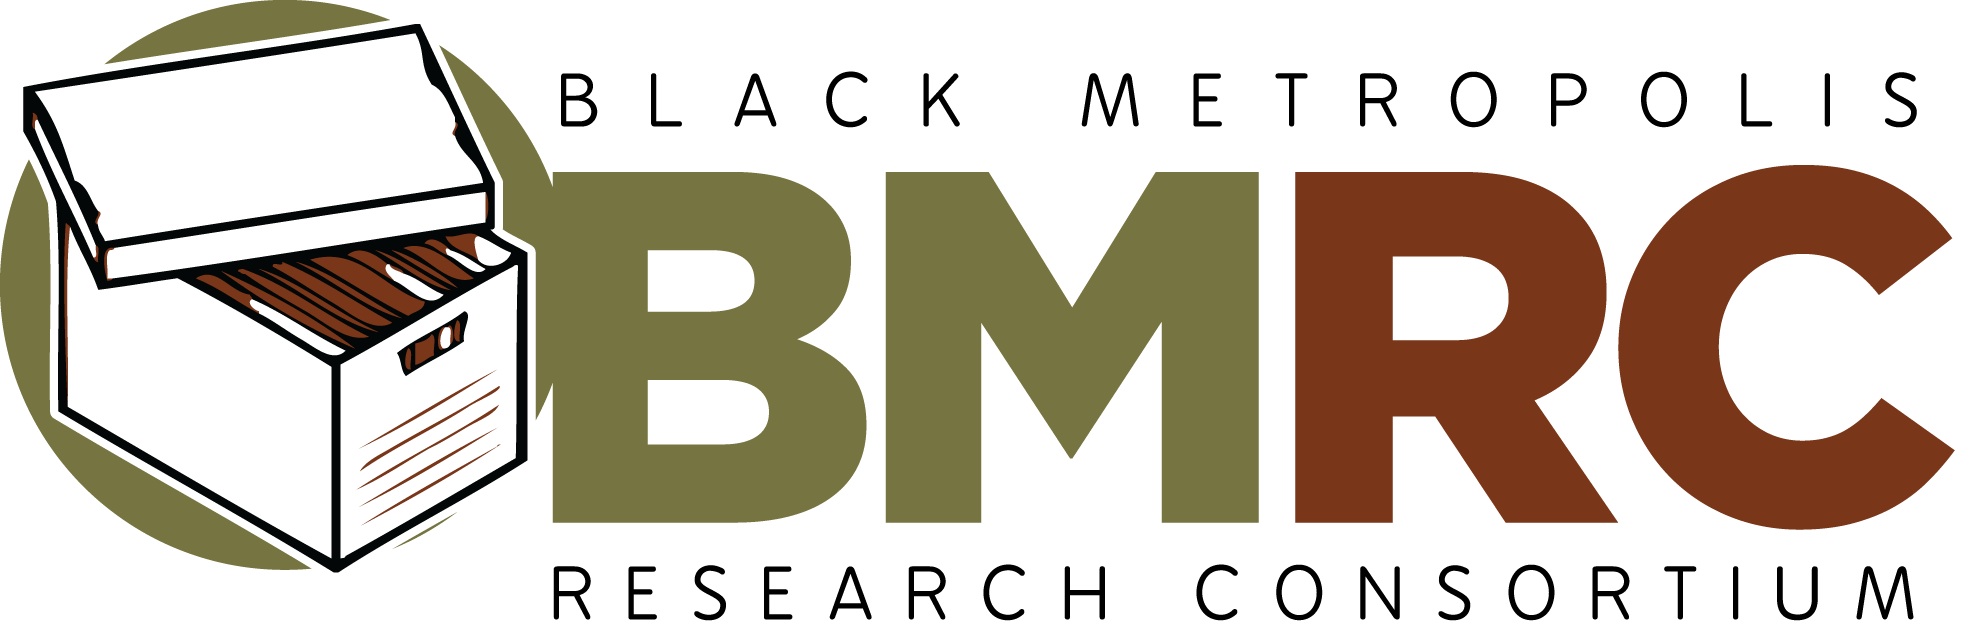 Black Metropolis Research Consortium logo